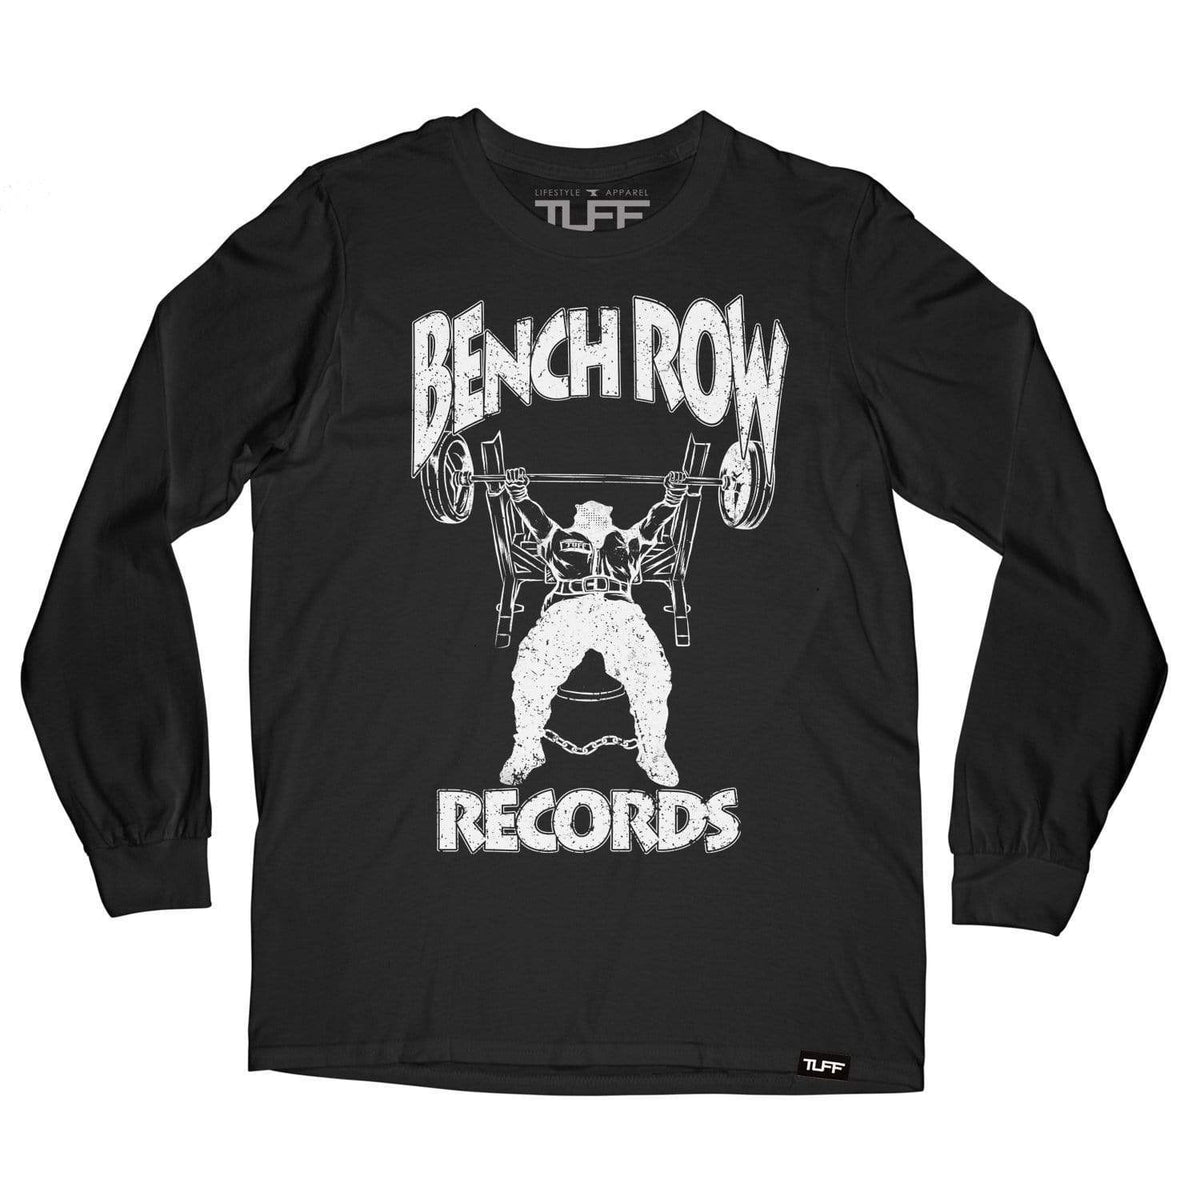 Bench Row Records Long Sleeve Tee S / Black v2 TuffWraps.com